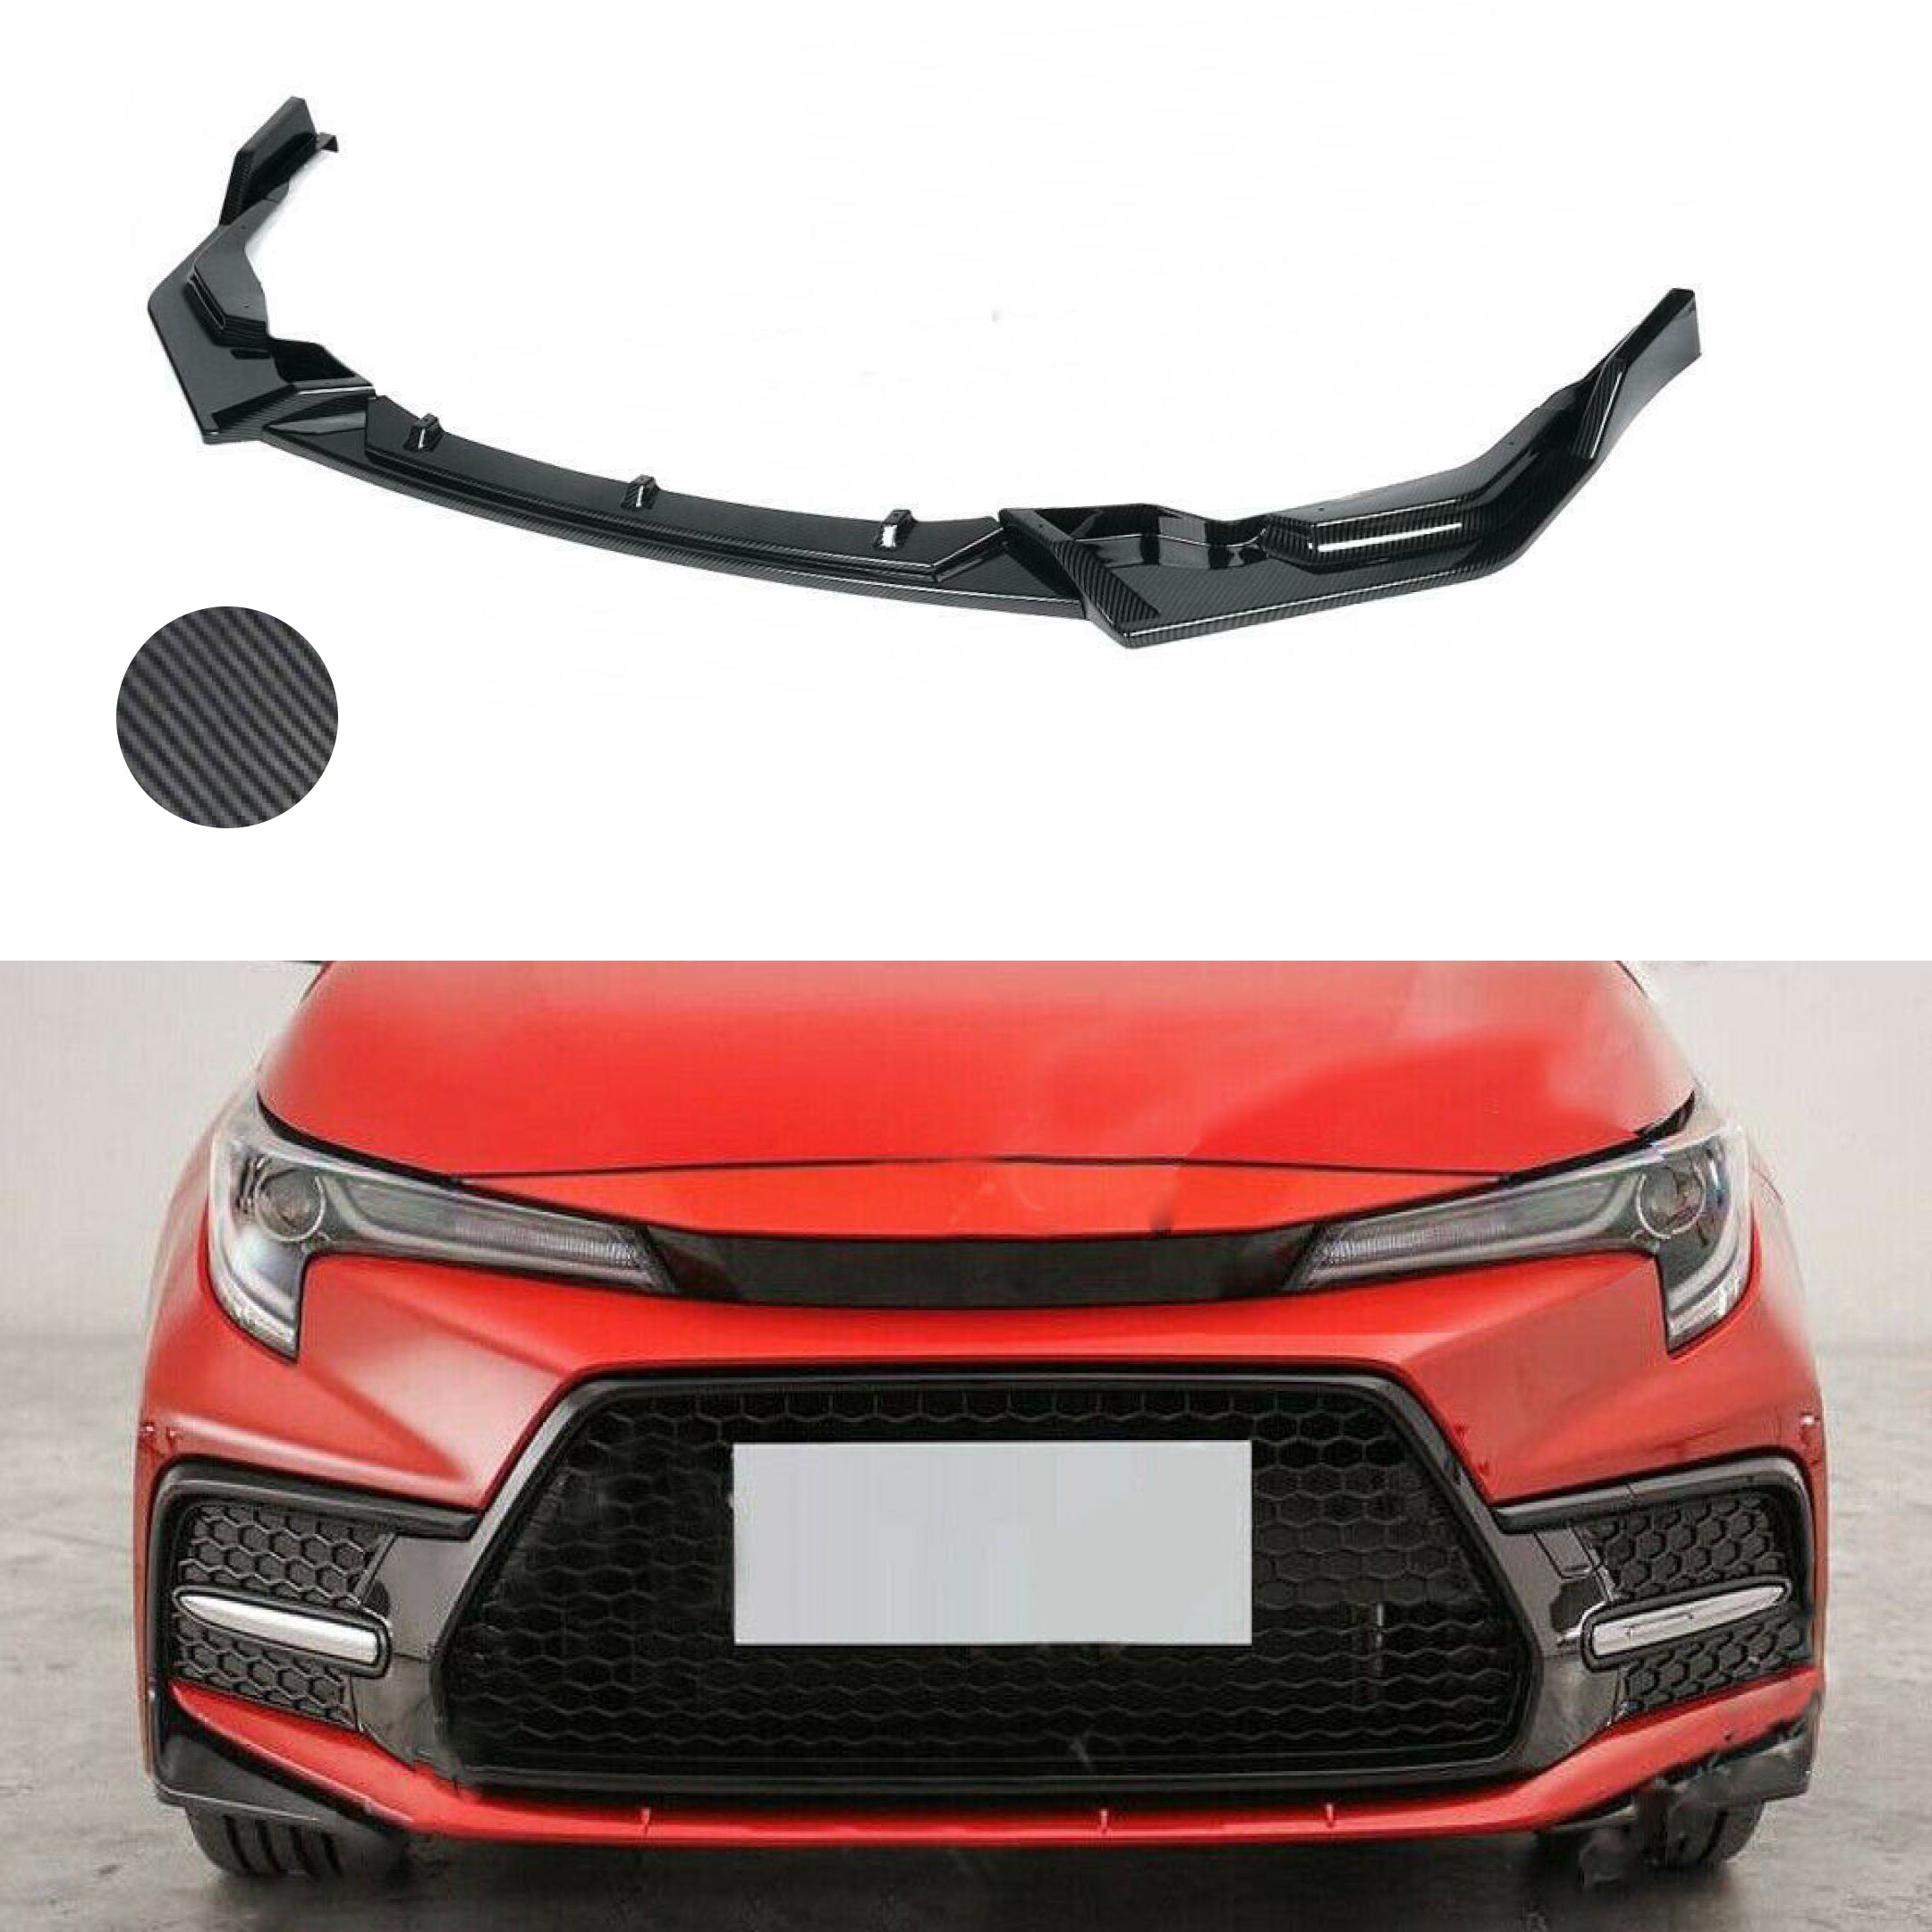 Front Lip & Spoiler - Carbon Fiber Print | Fits Toyota Corolla SE XSE (2020-24)